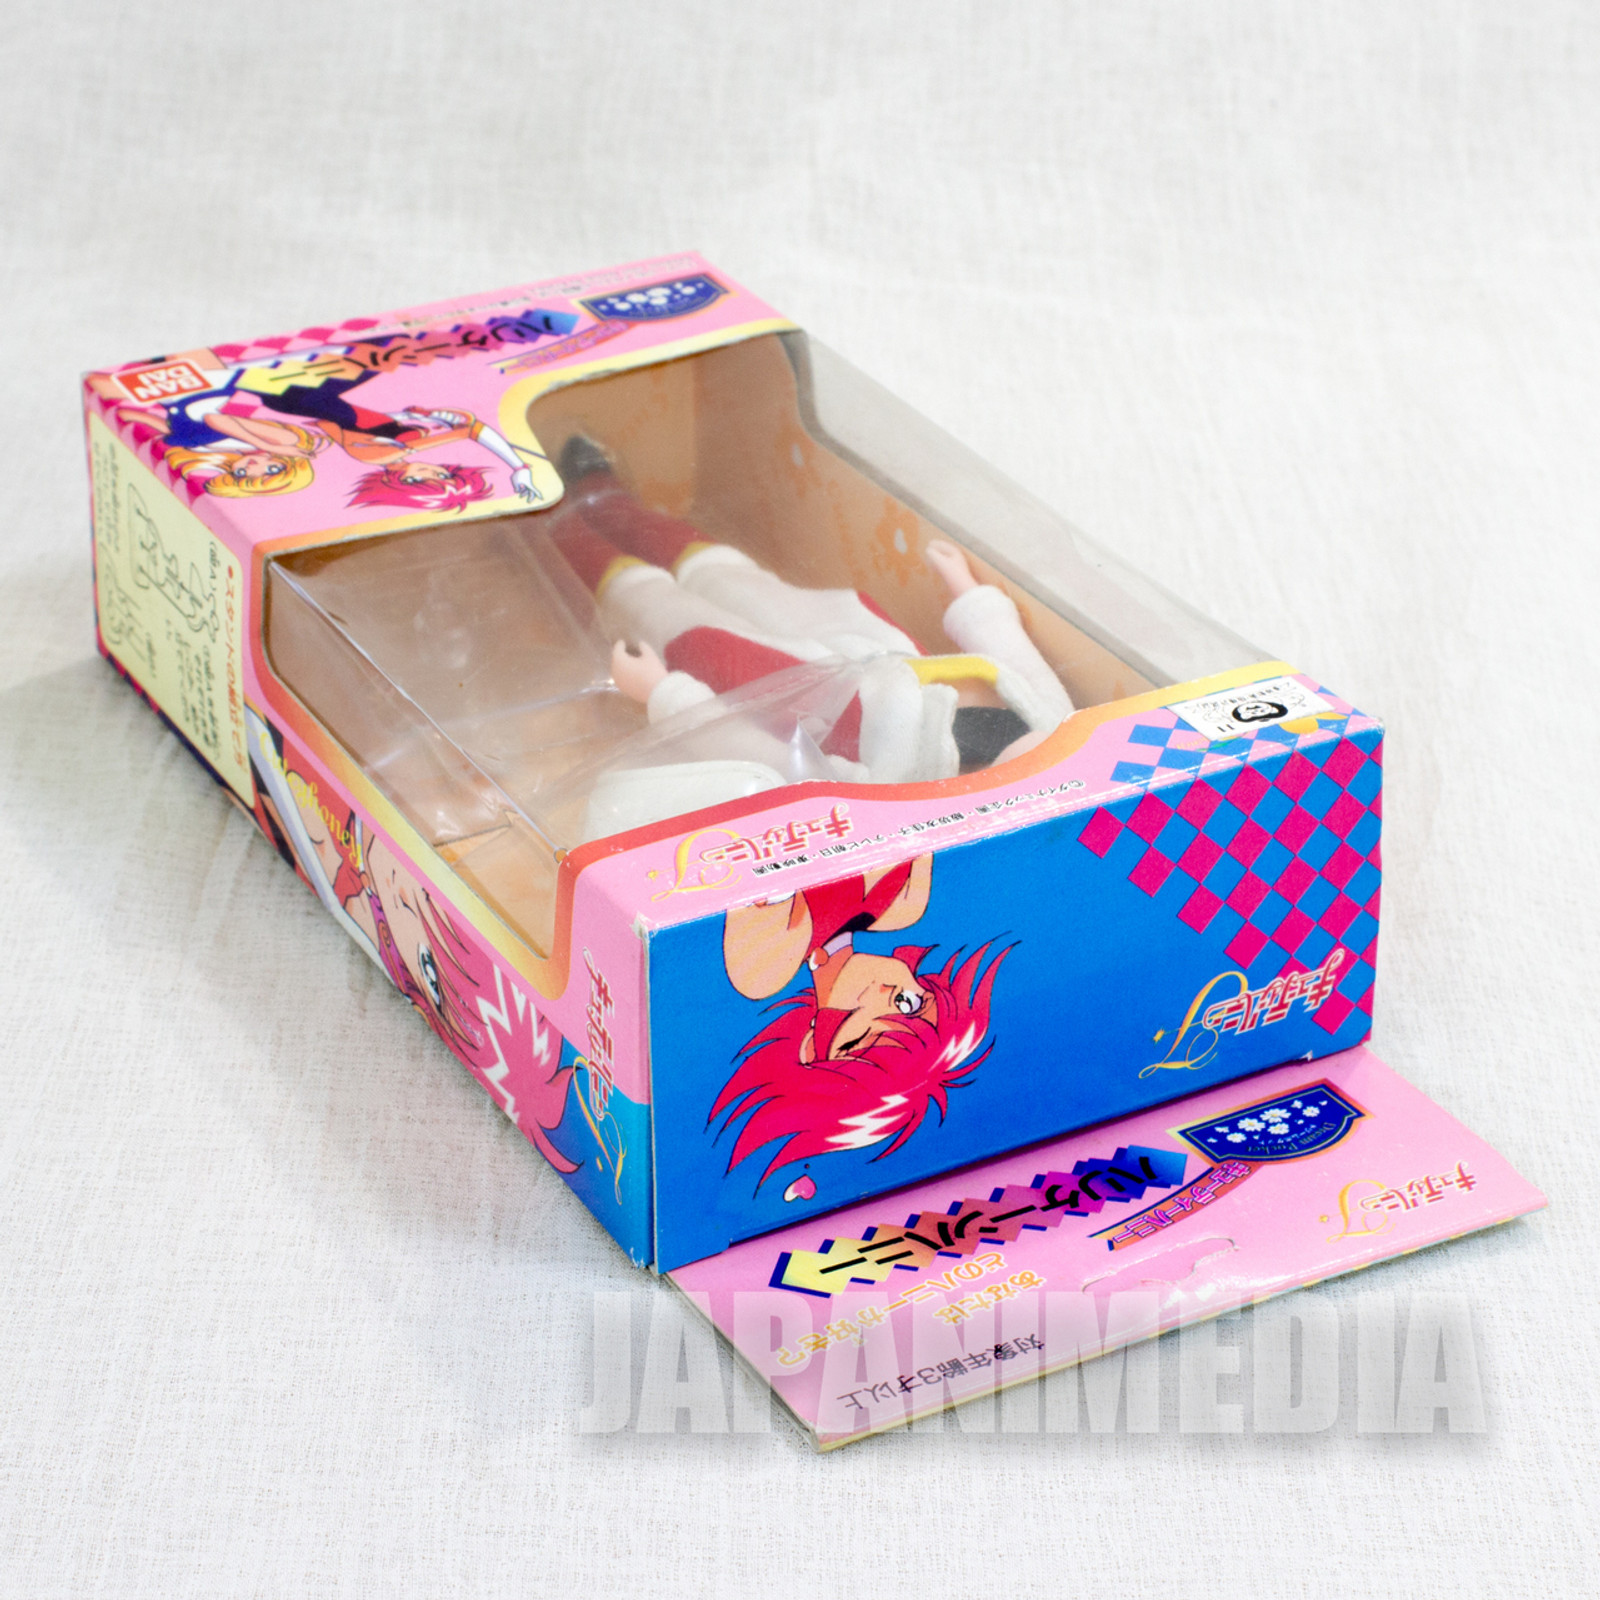 Cutie Honey Doll Figure Hurricane ver. Dream Pocket BANDAI JAPAN ANIME MANGA